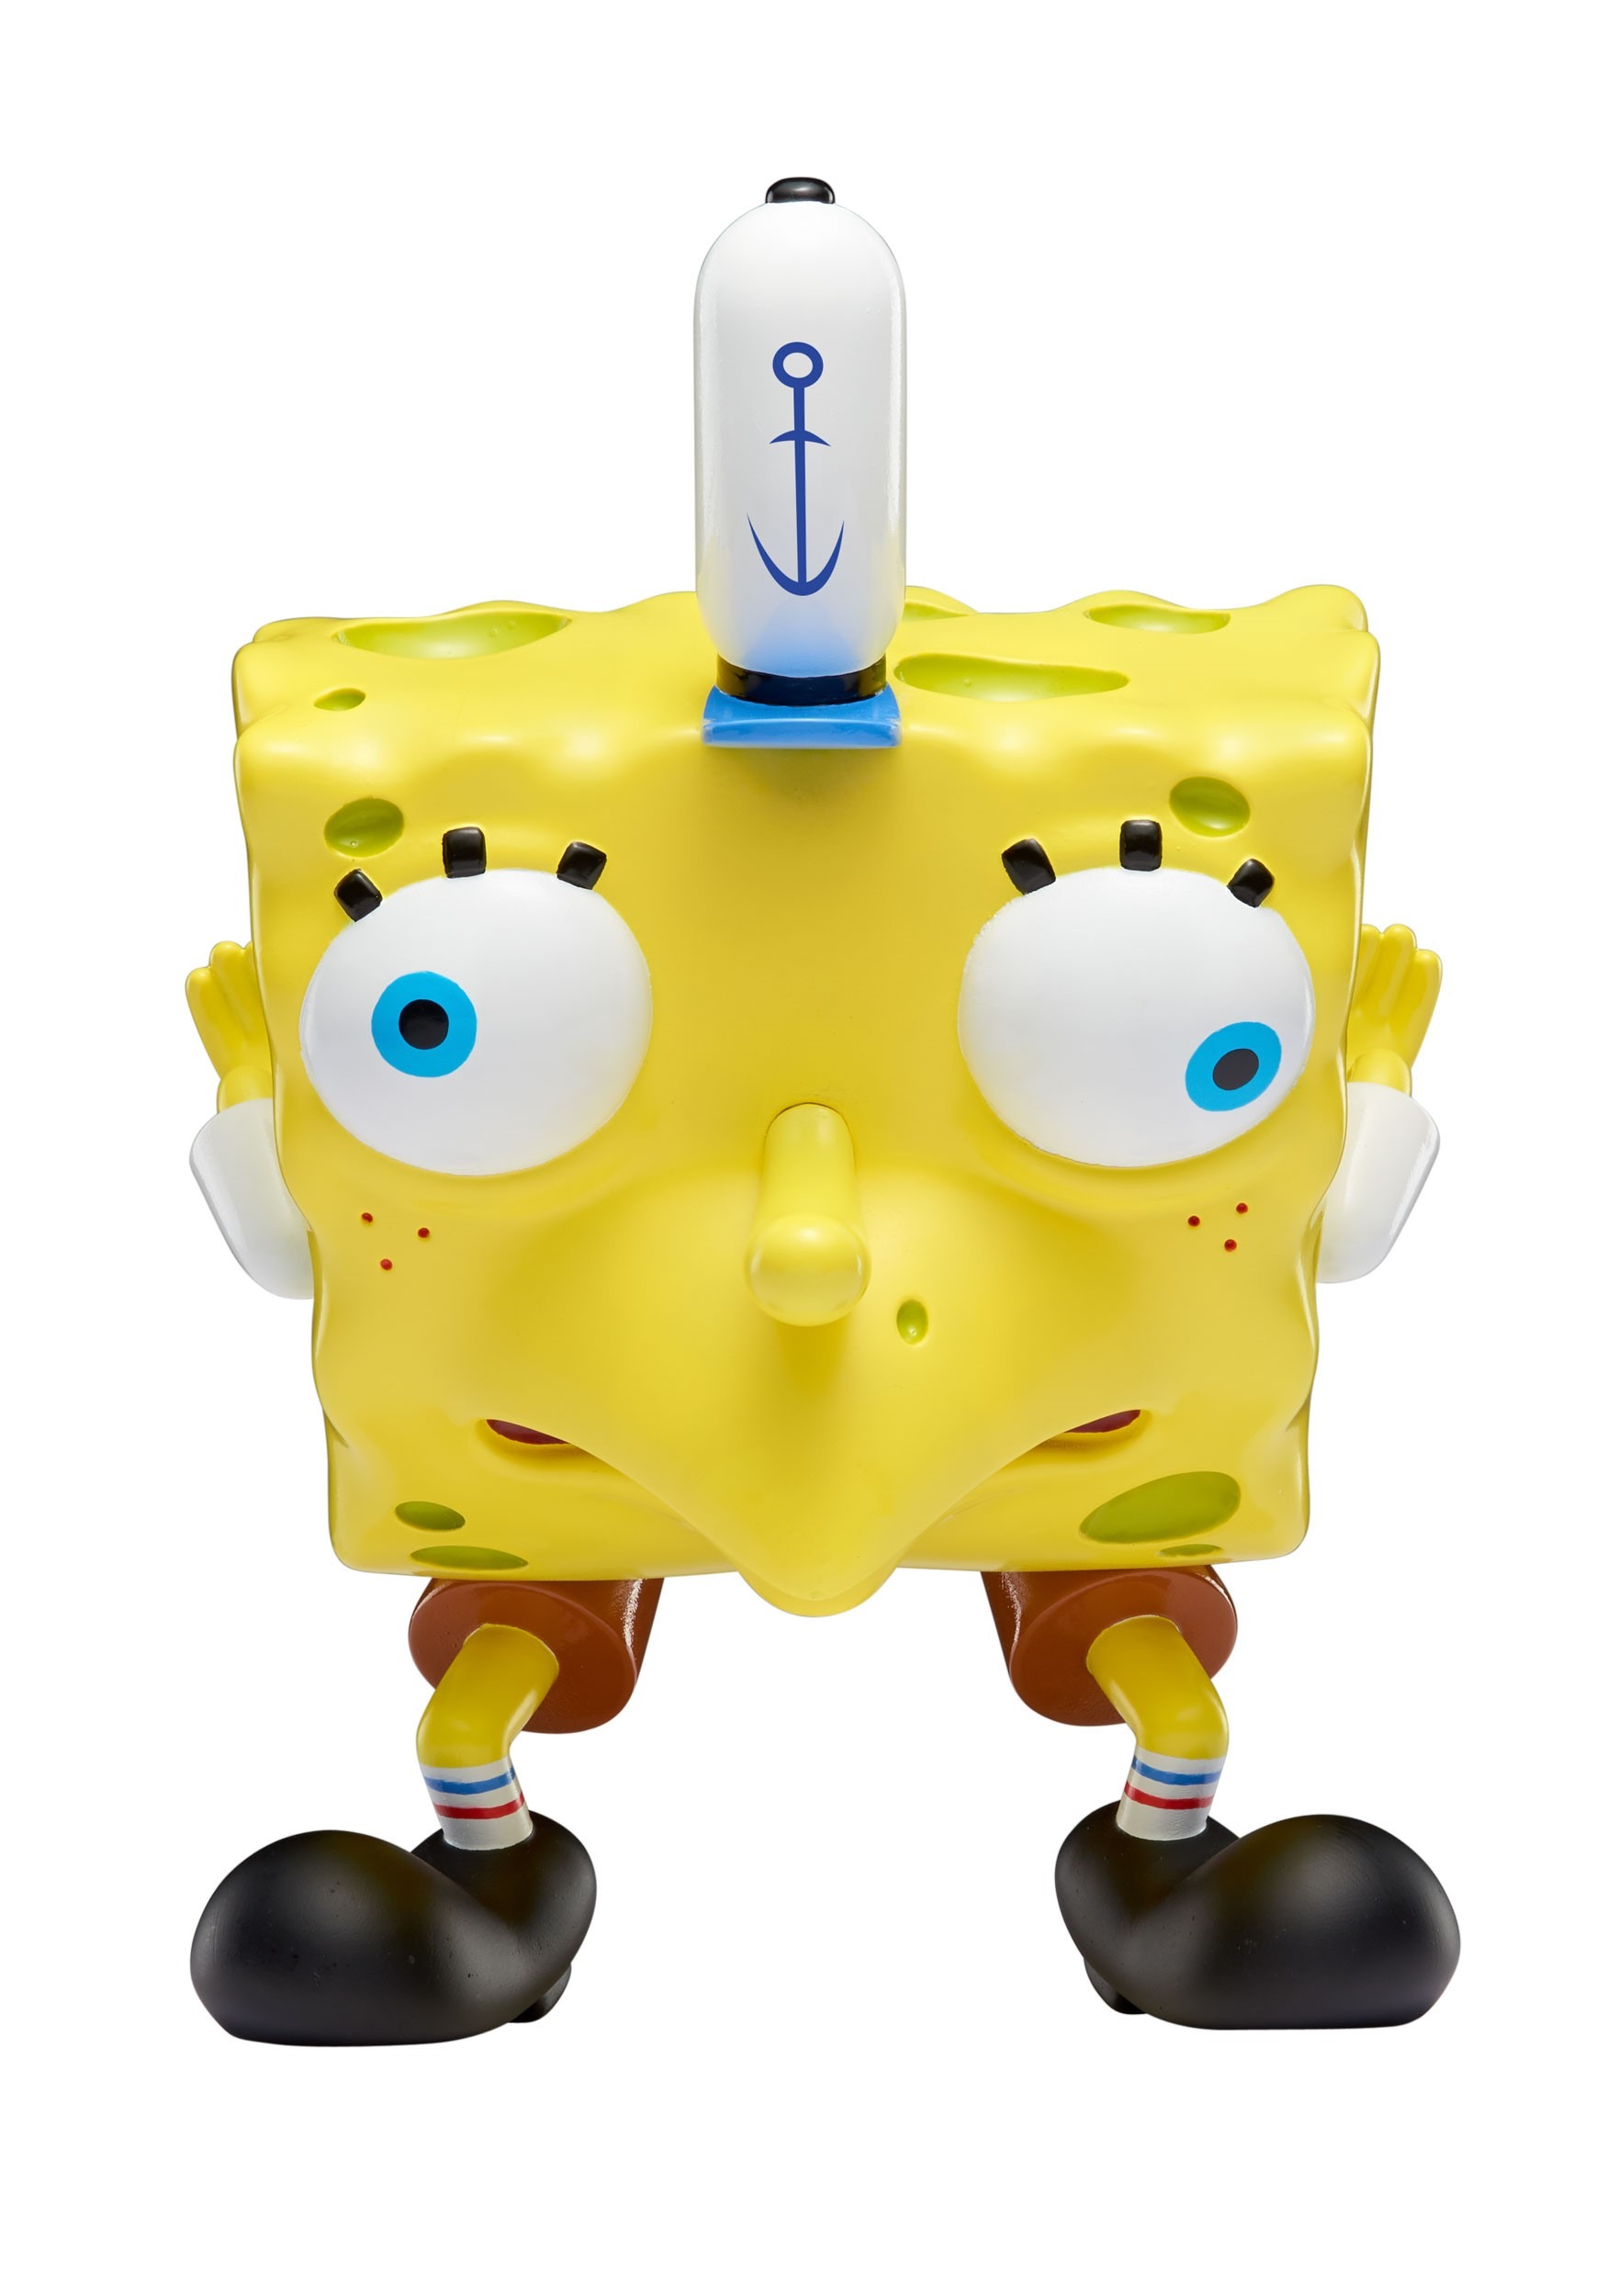 Spongebob SquarePants Masterpiece Collection: Spongebob Mocking Figure